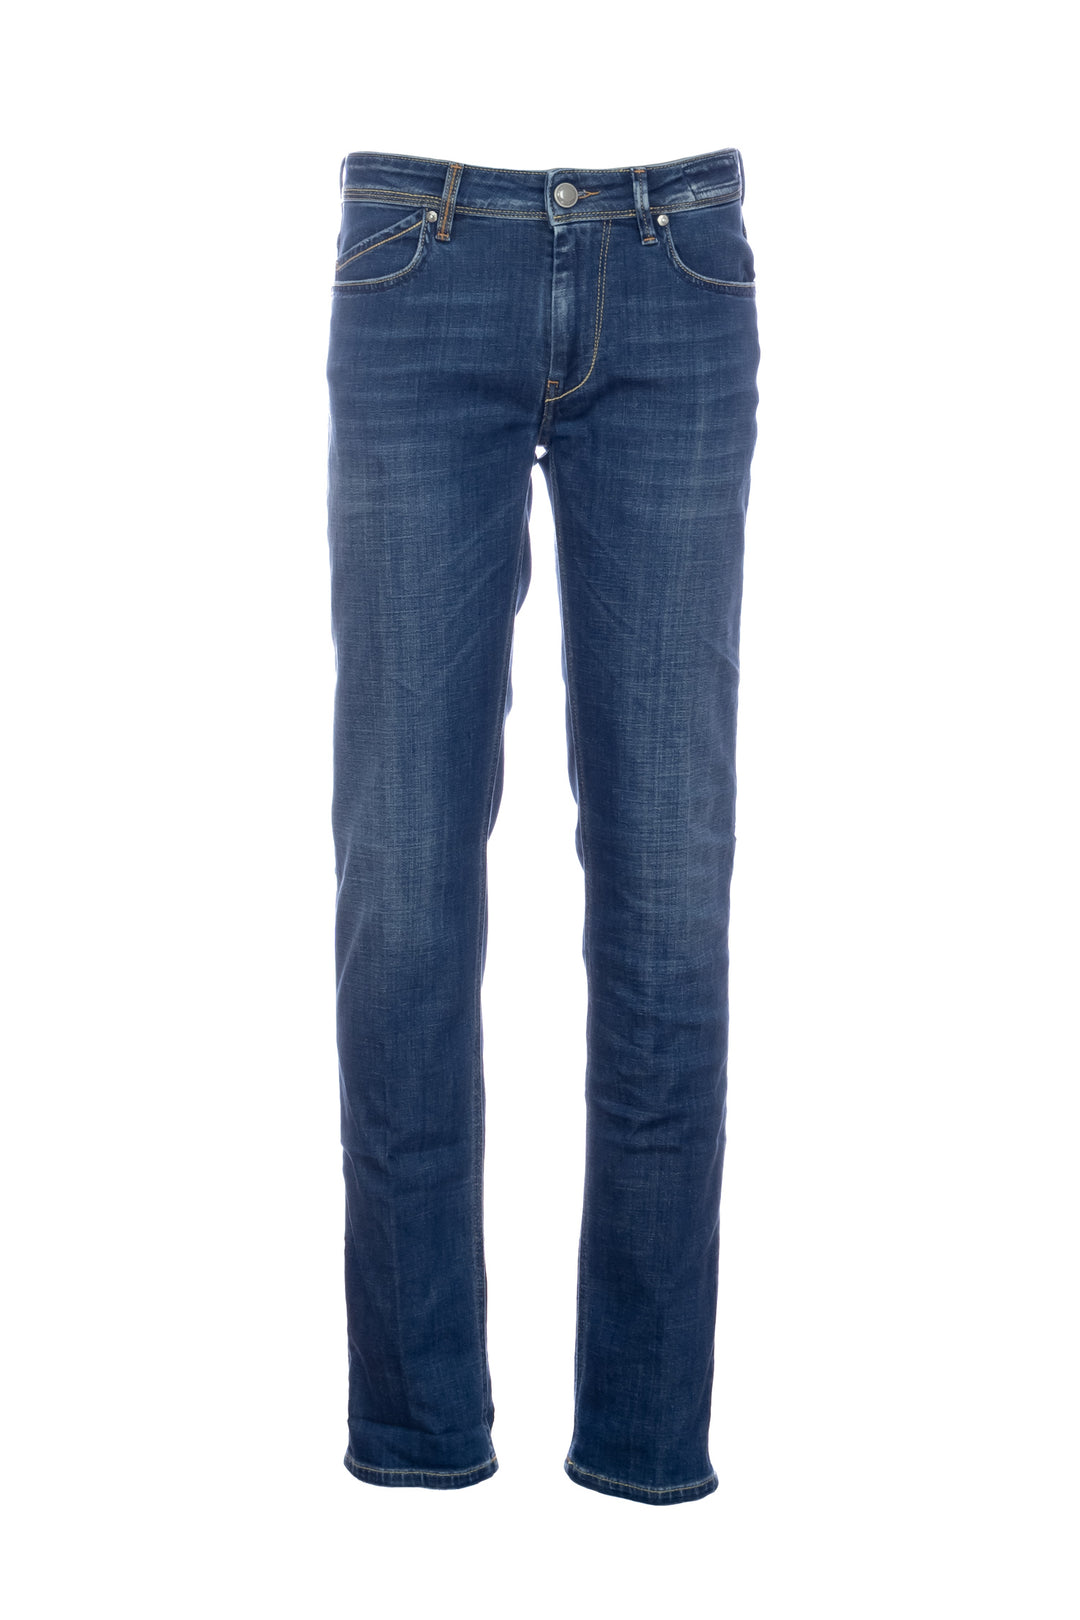 RE-HASH Jeans 5 tasche “RUBENS-Z” in denim stretch 9oz lavaggio medio - Mancinelli 1954